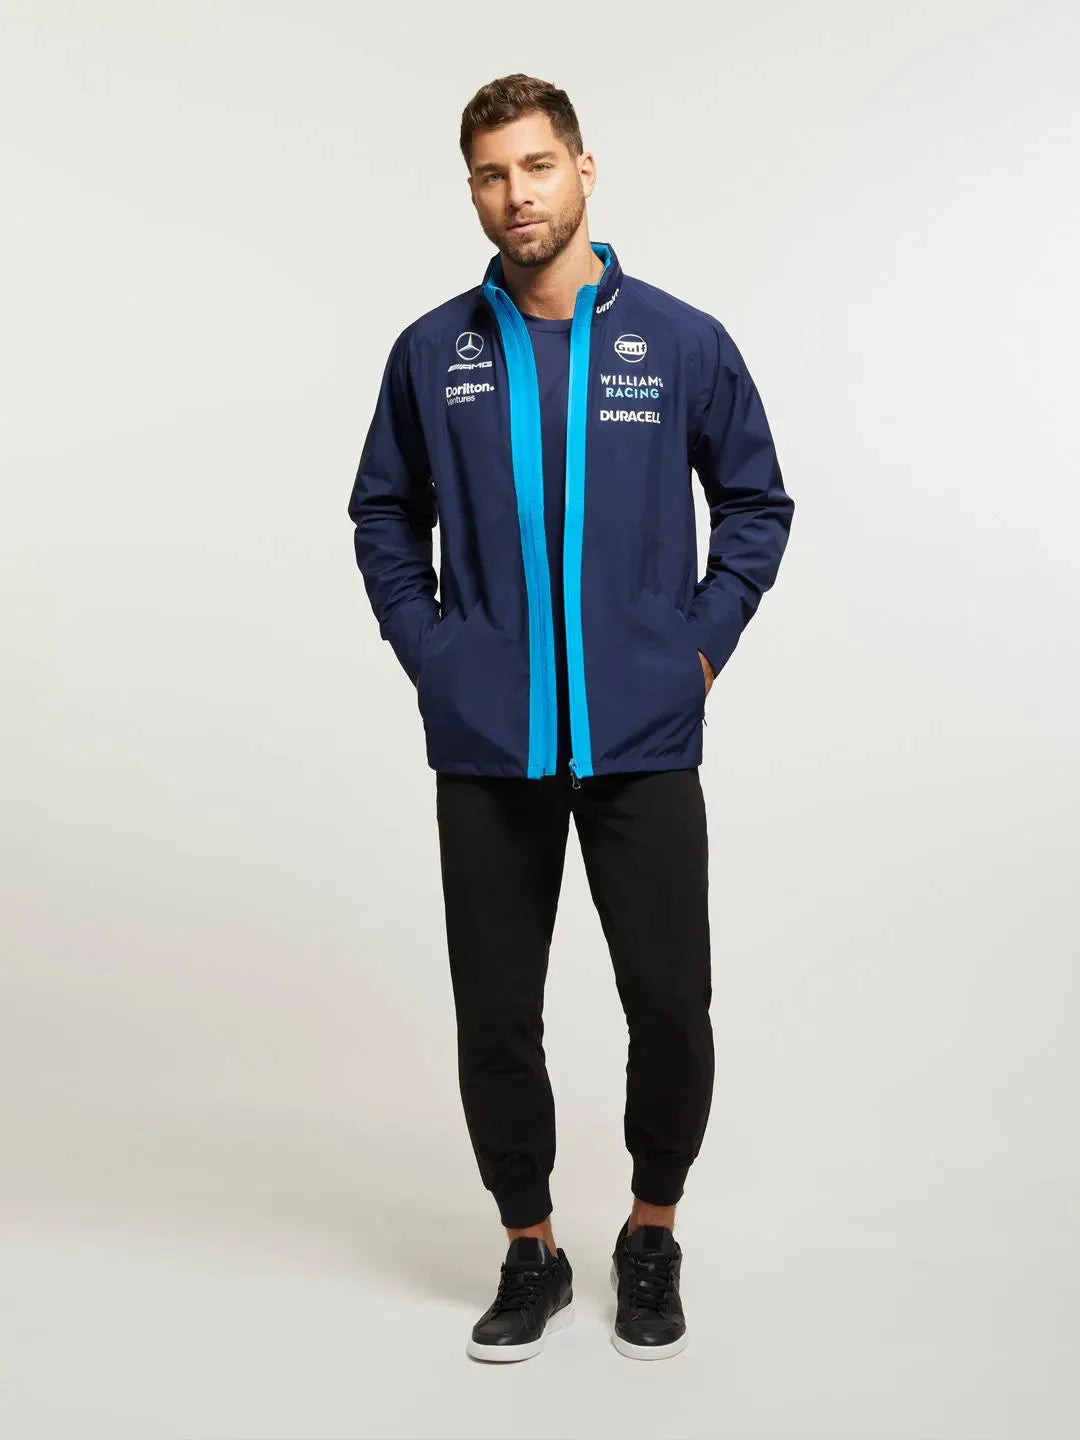 Williams Racing F1 2023 Men's Team Performance Jacket -Blue